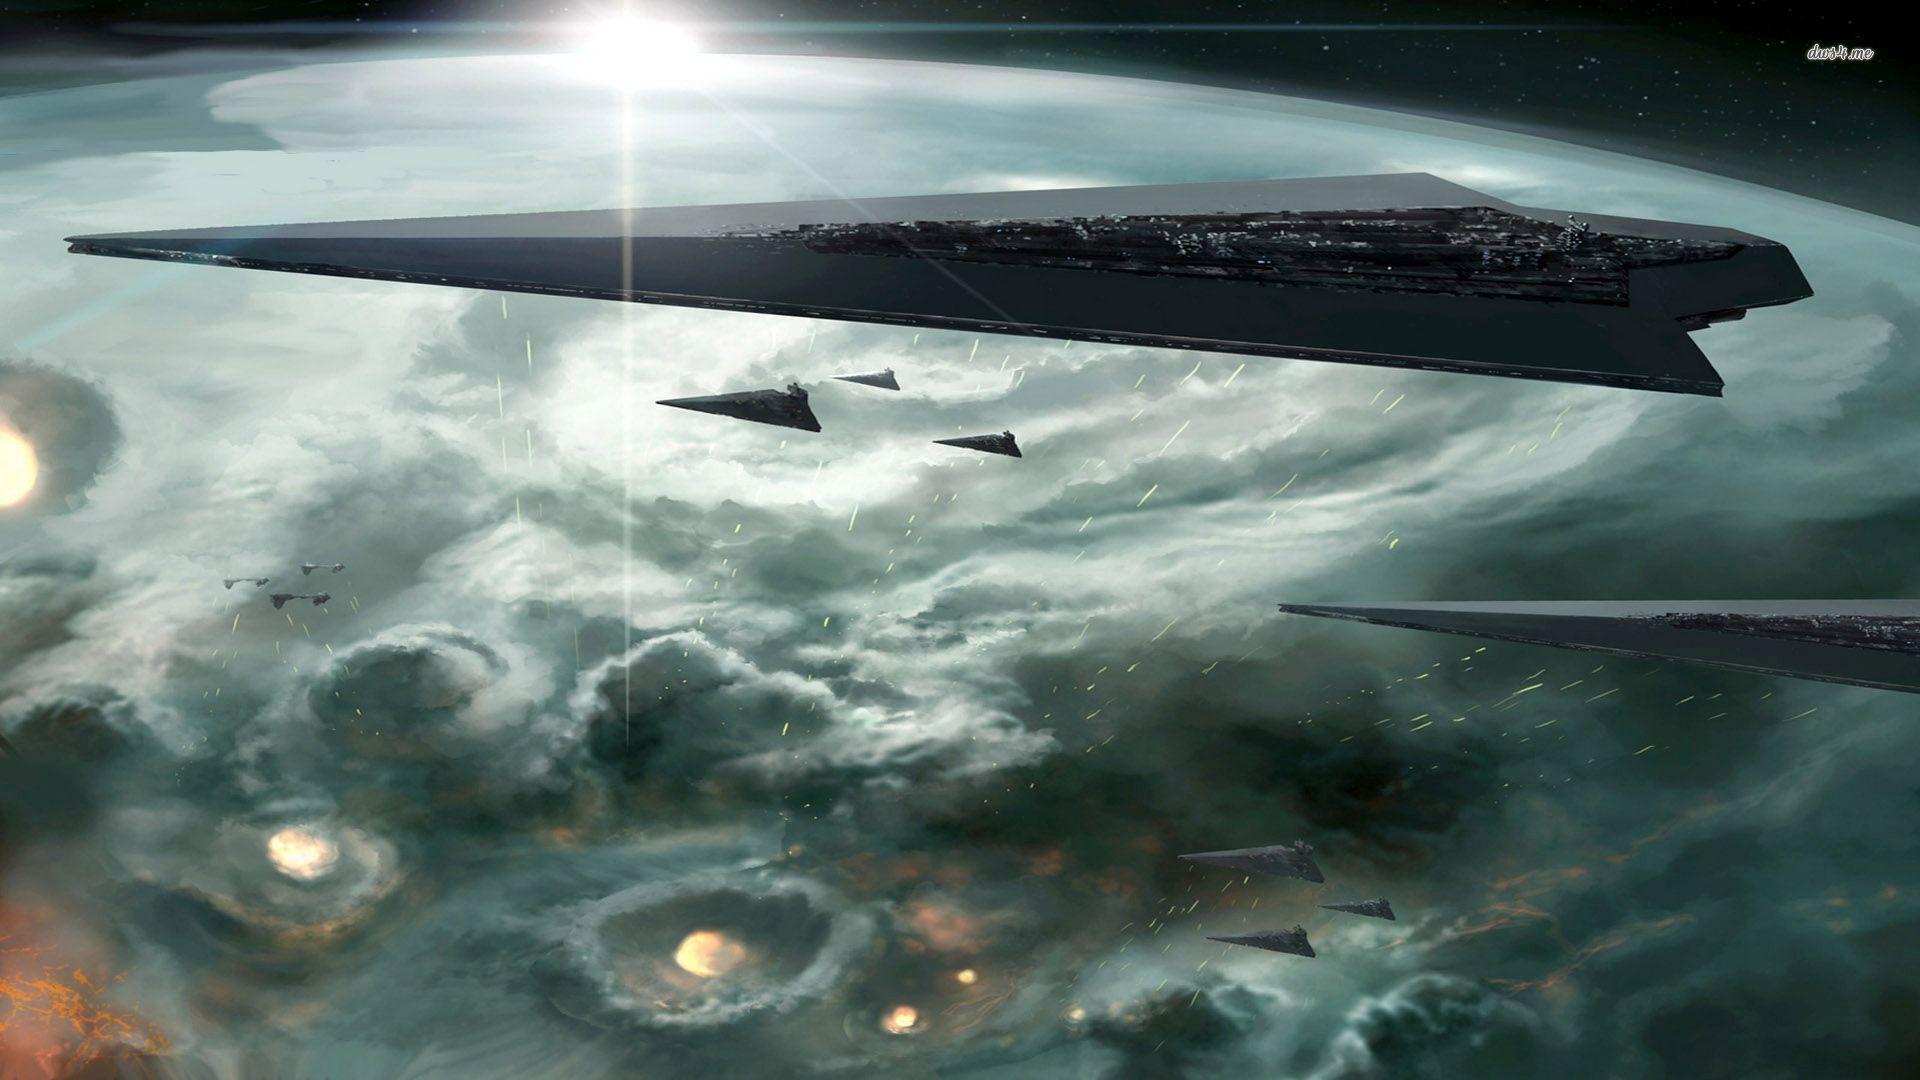 Star Wars Imperial Star Destroyer HD wallpaper. Star wars wallpaper, Star wars art, Star wars ships